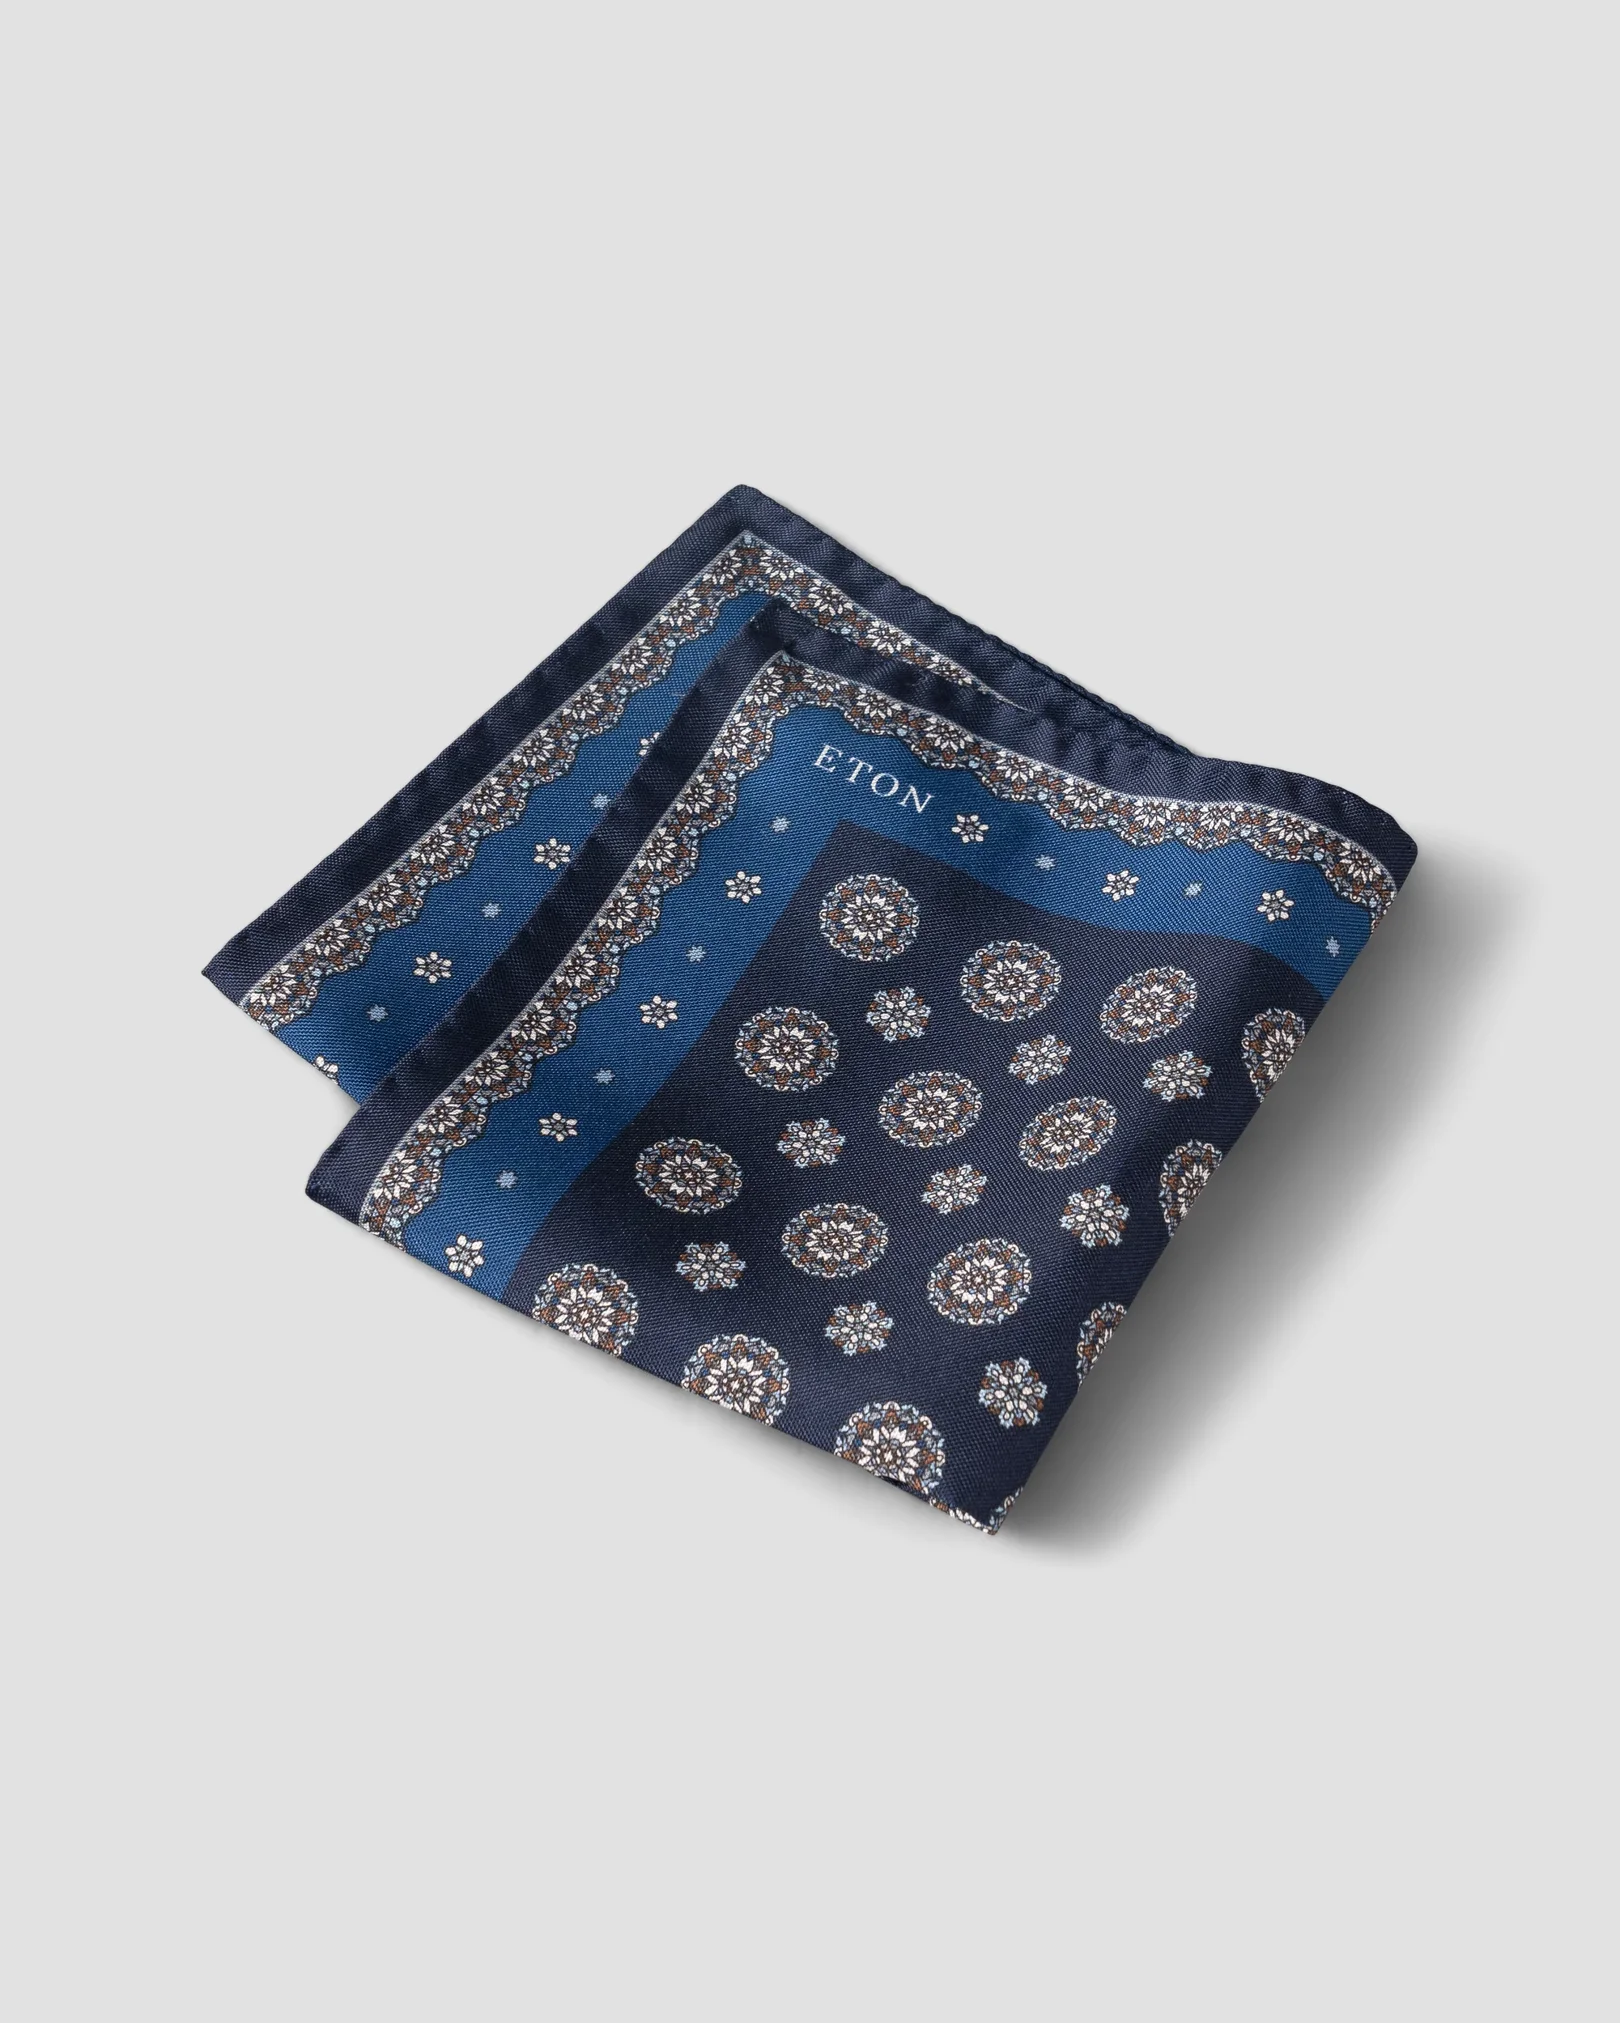 Eton - navy blue timeless pocket square